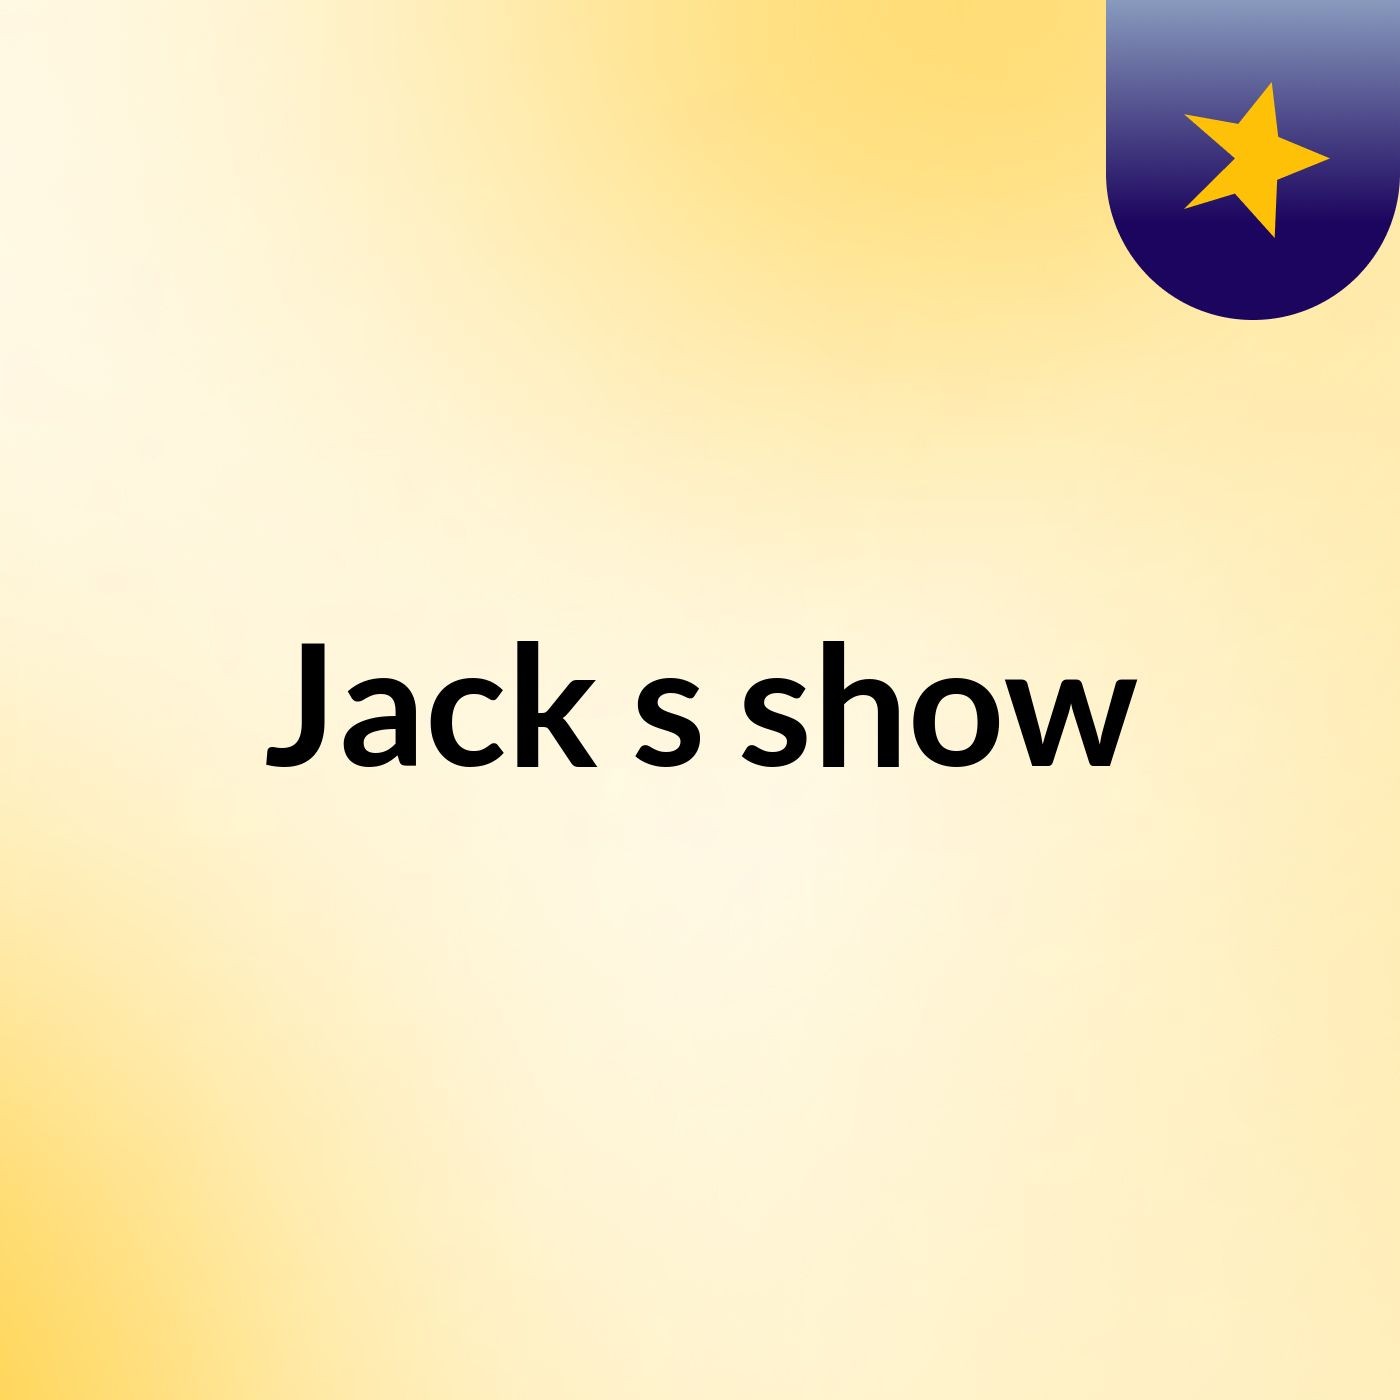 Jack's show